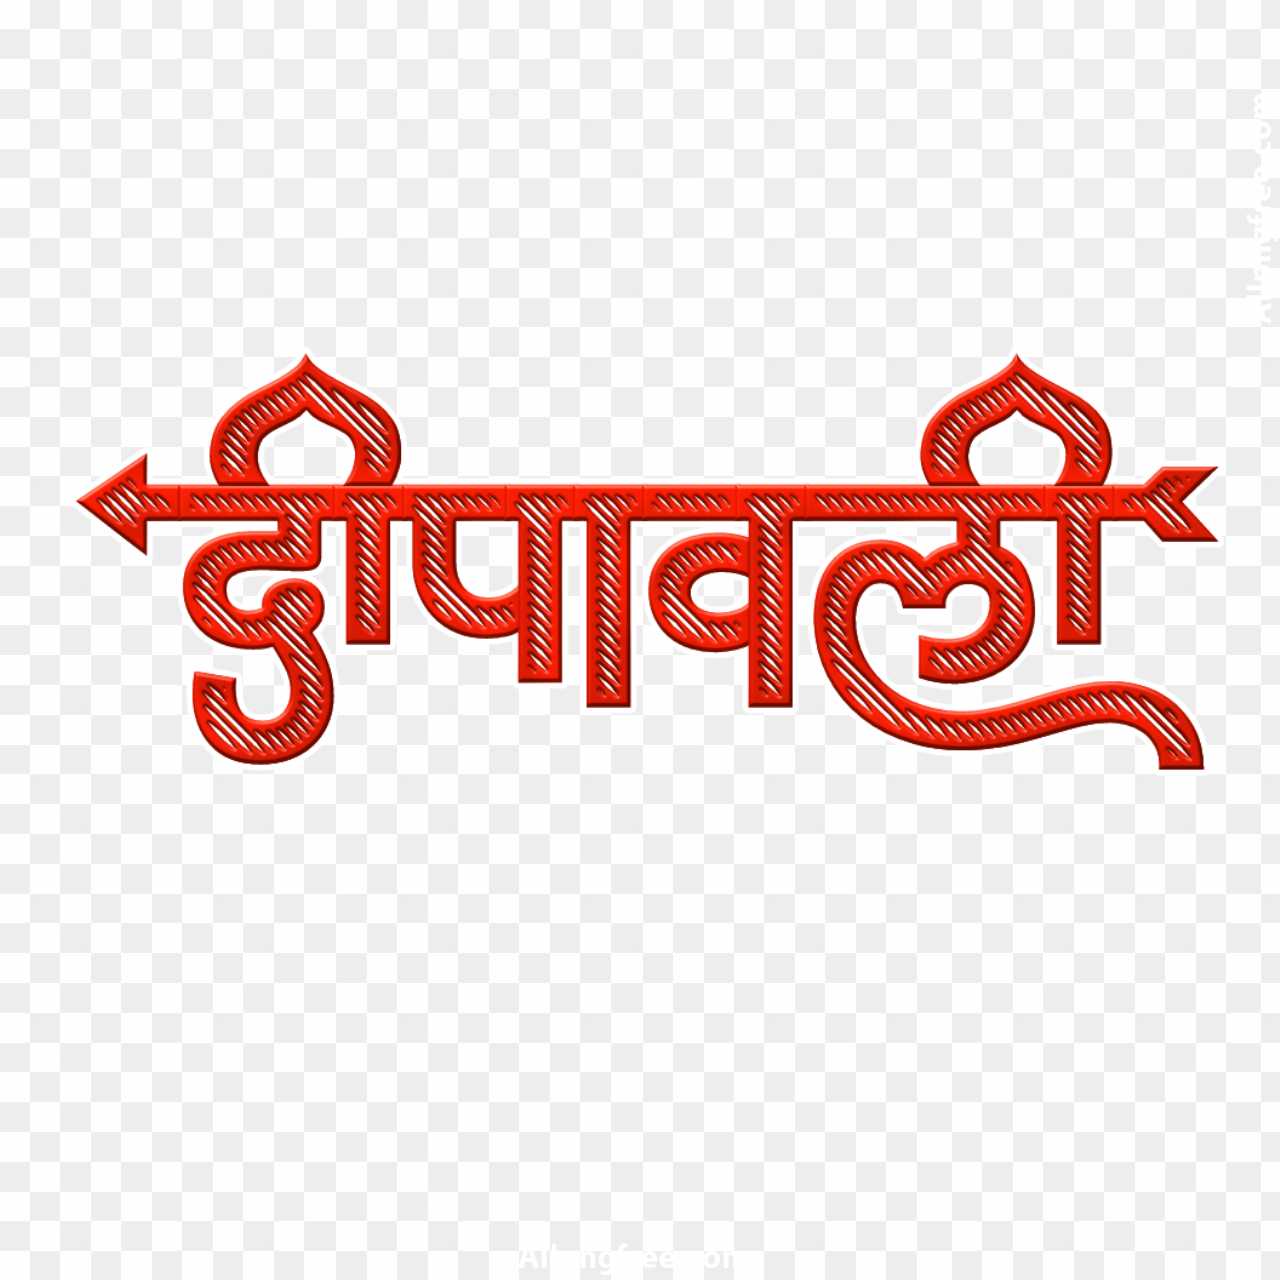 Diwali text PNG, Dipawali ine Hindi text PNG transparent images download 